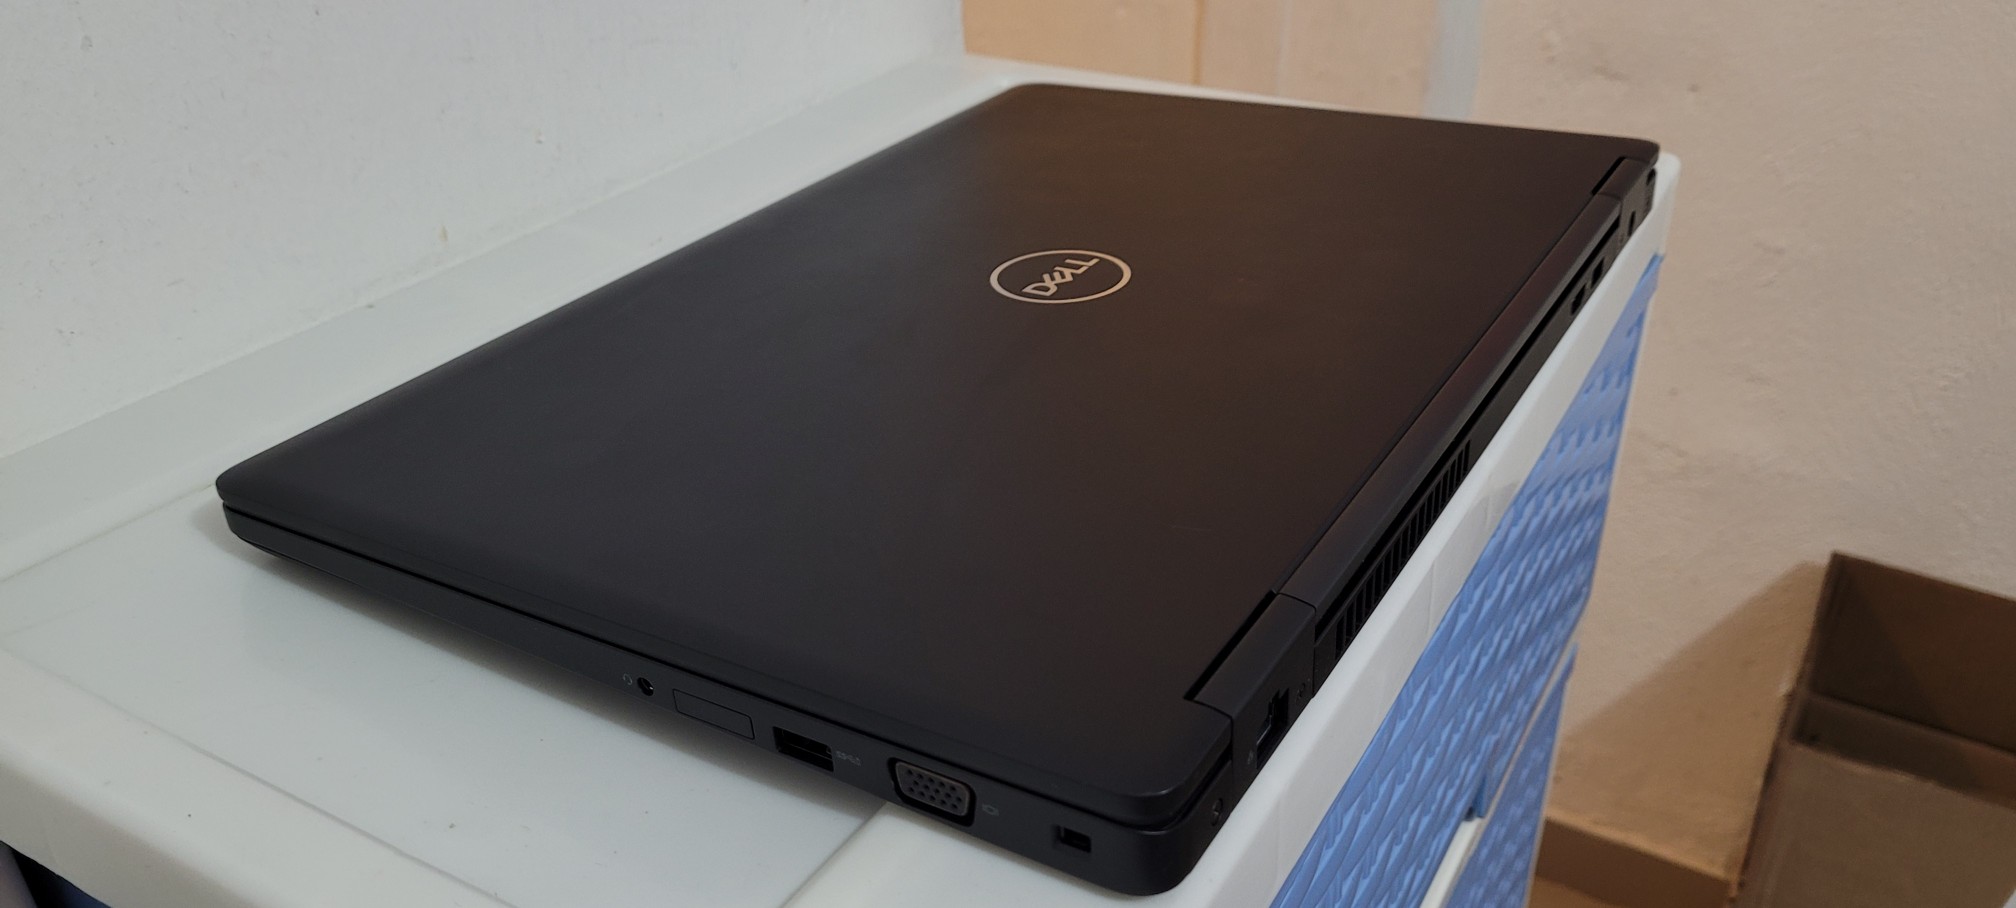 computadoras y laptops - Dell 5590 17 Pulg Core i5 8va Gen Ram 16gb Disco 512gb Solido Full HD 2